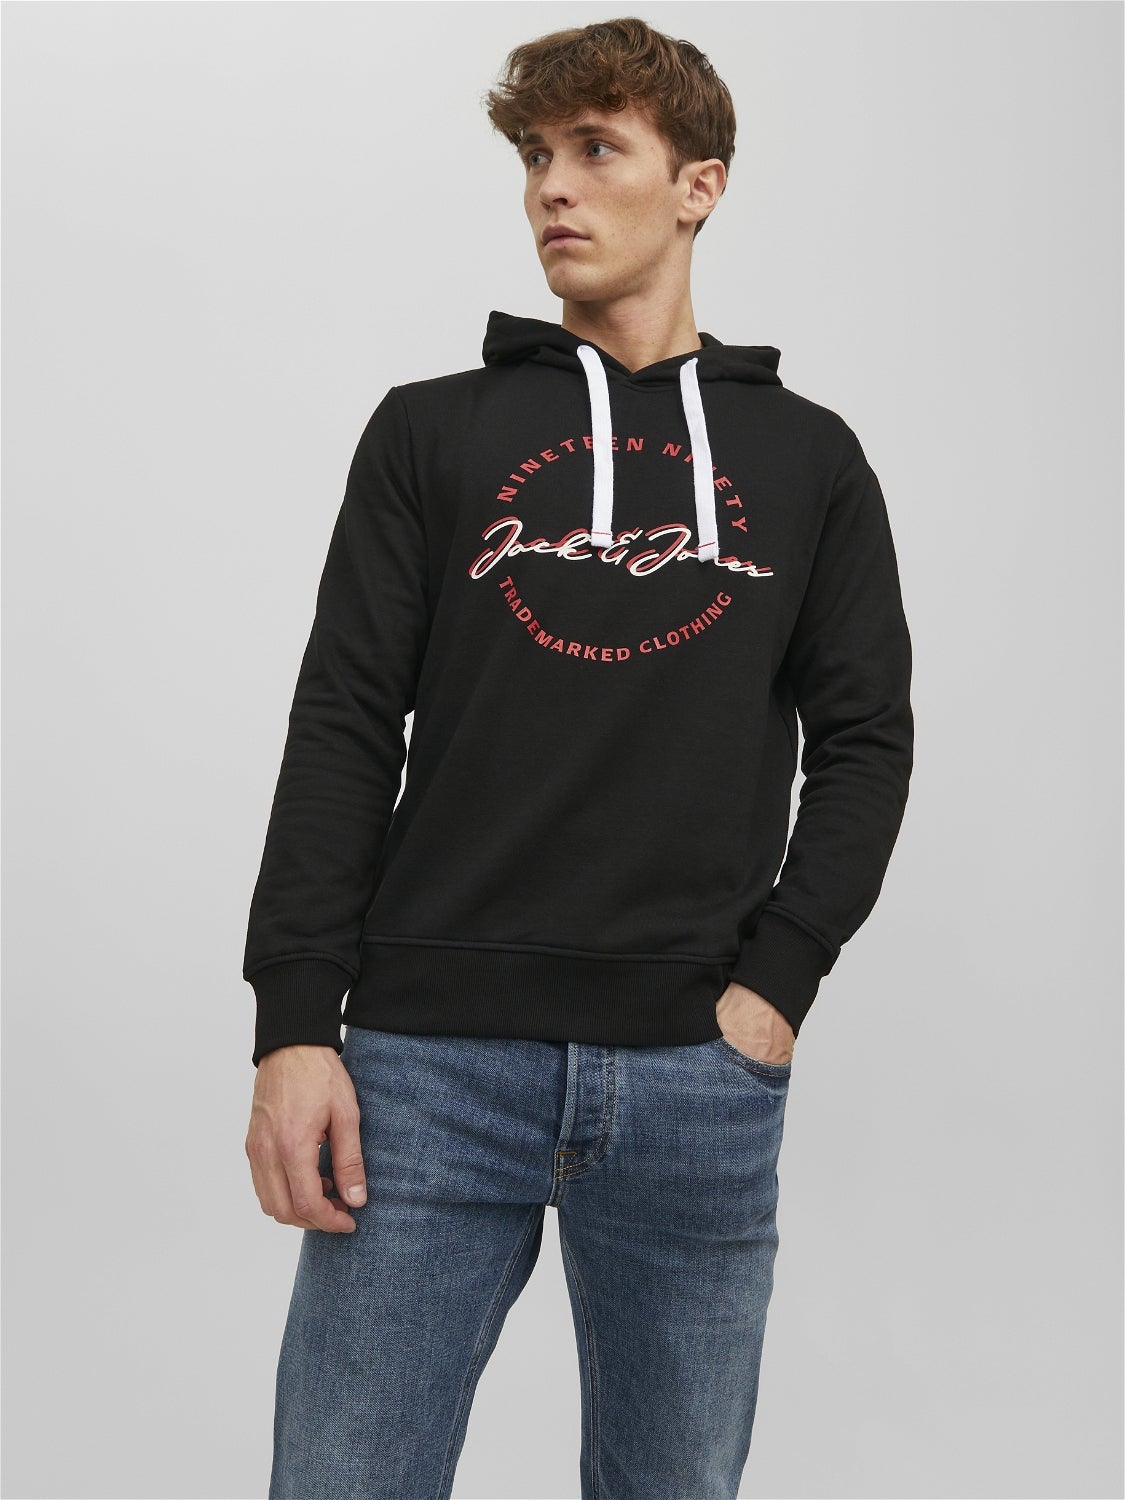 Red L Jack & Jones sweatshirt MEN FASHION Jumpers & Sweatshirts Hoodie discount 56% 